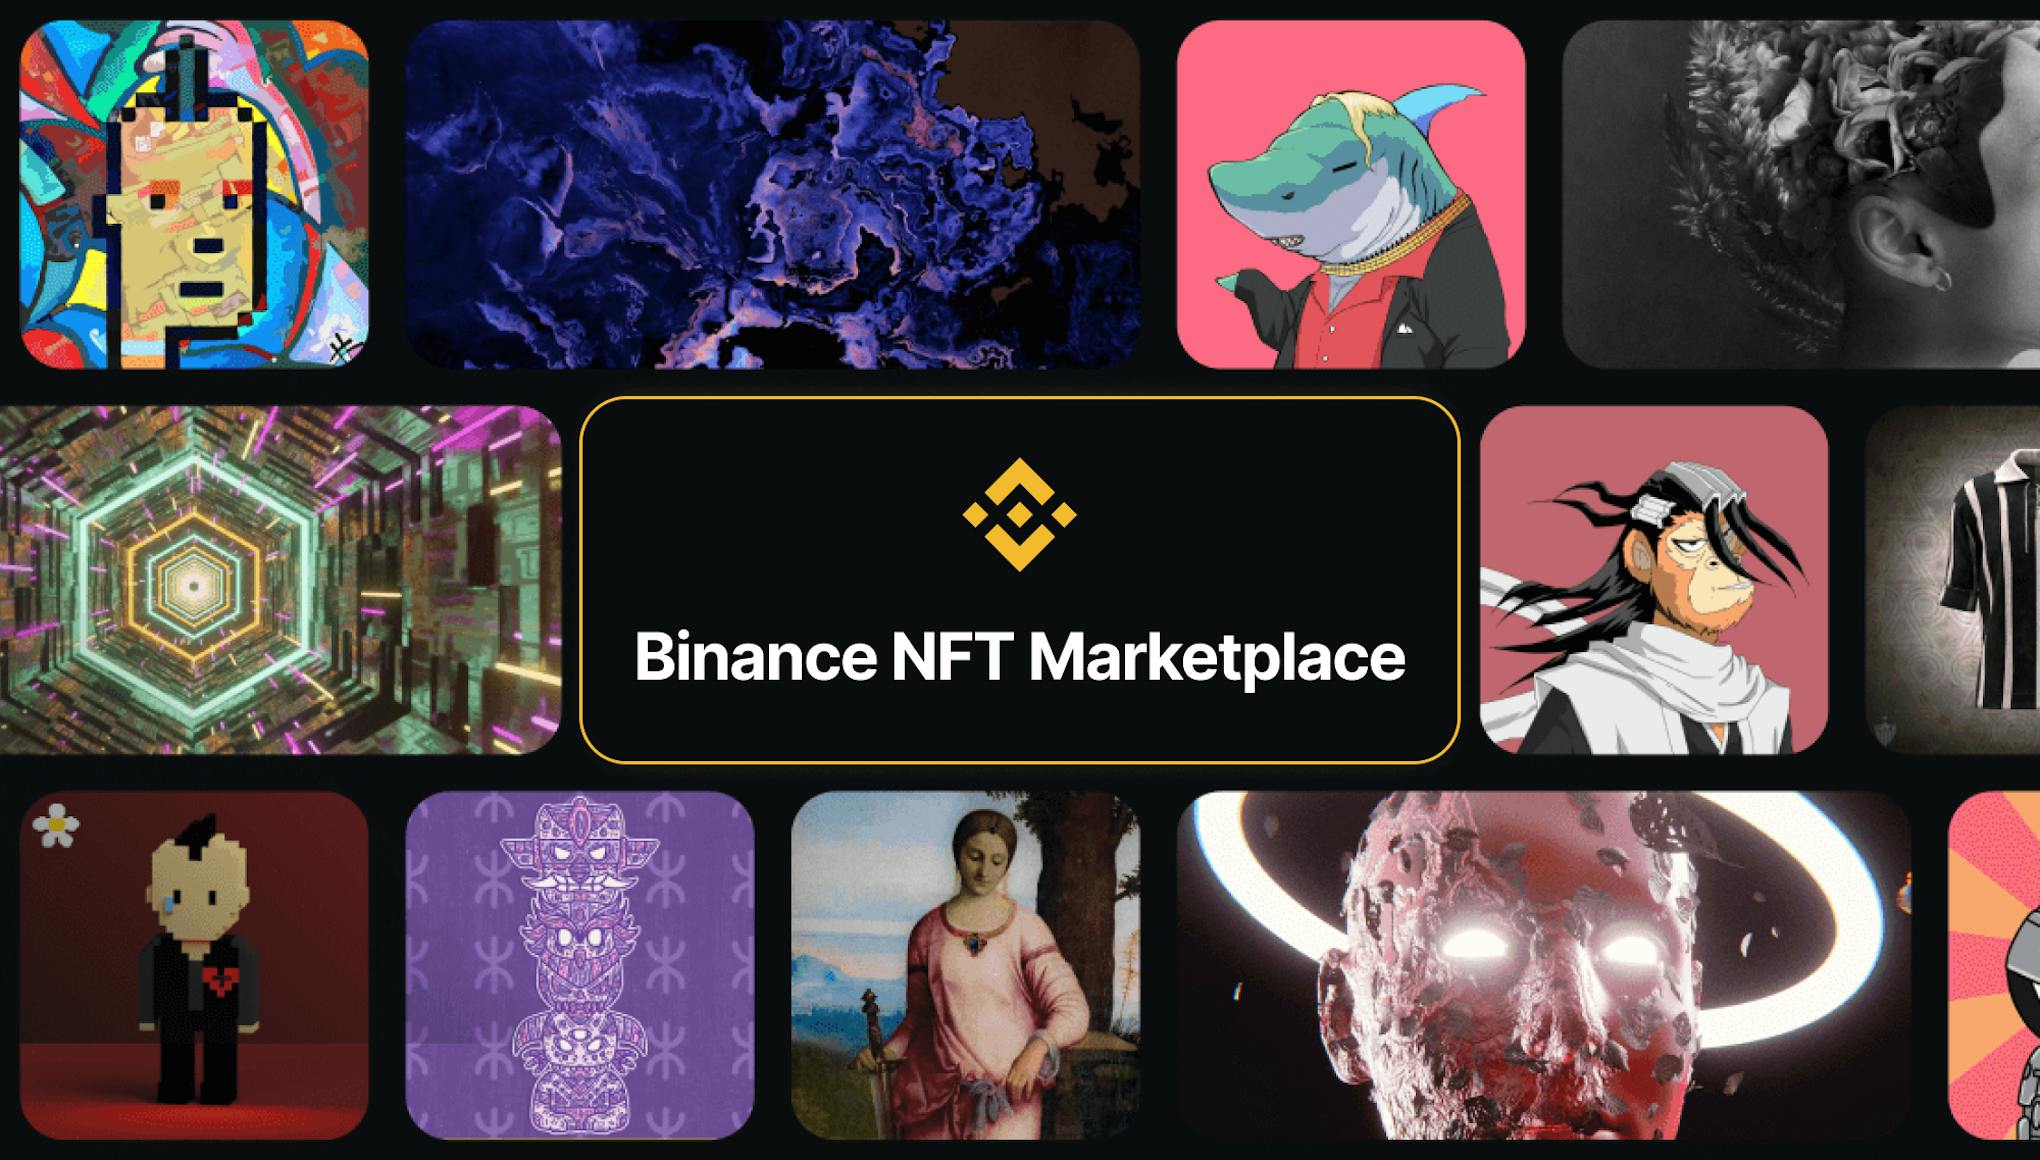 Binance NFT marketplace.